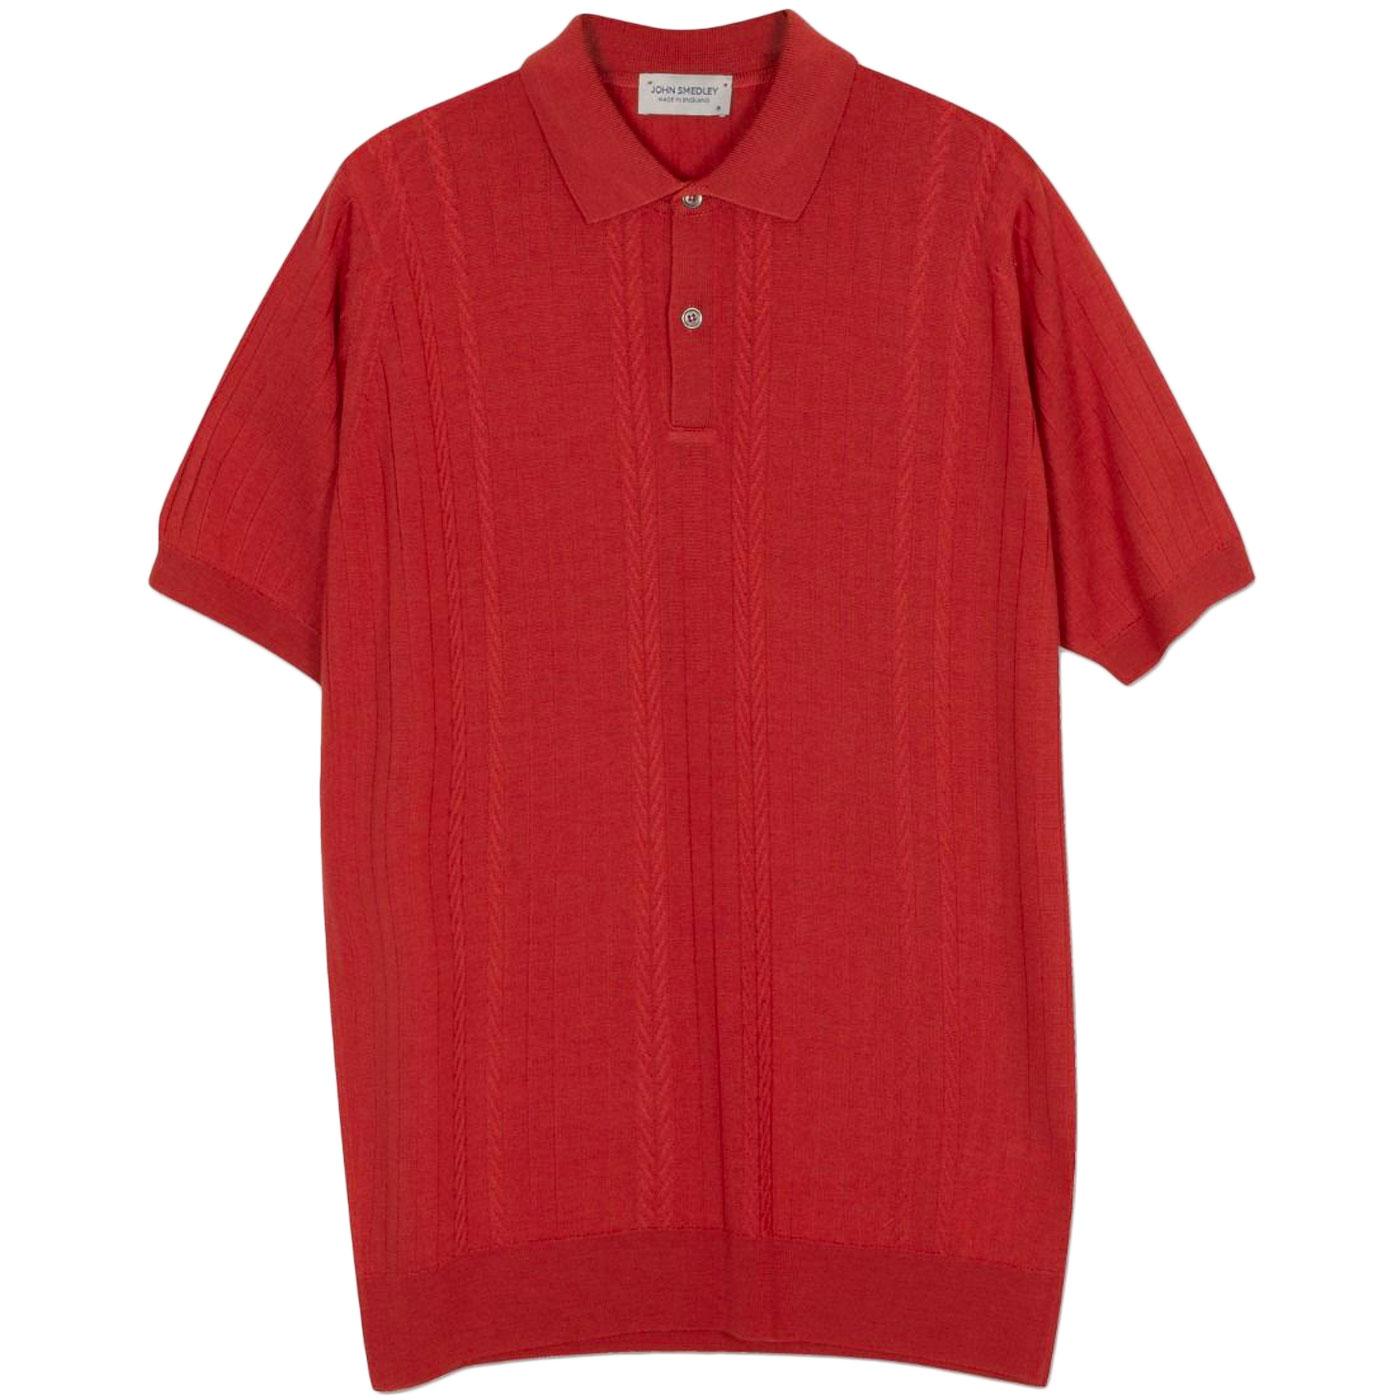 Hoffman John Smedley Fine Knit Cable Polo Shirt R